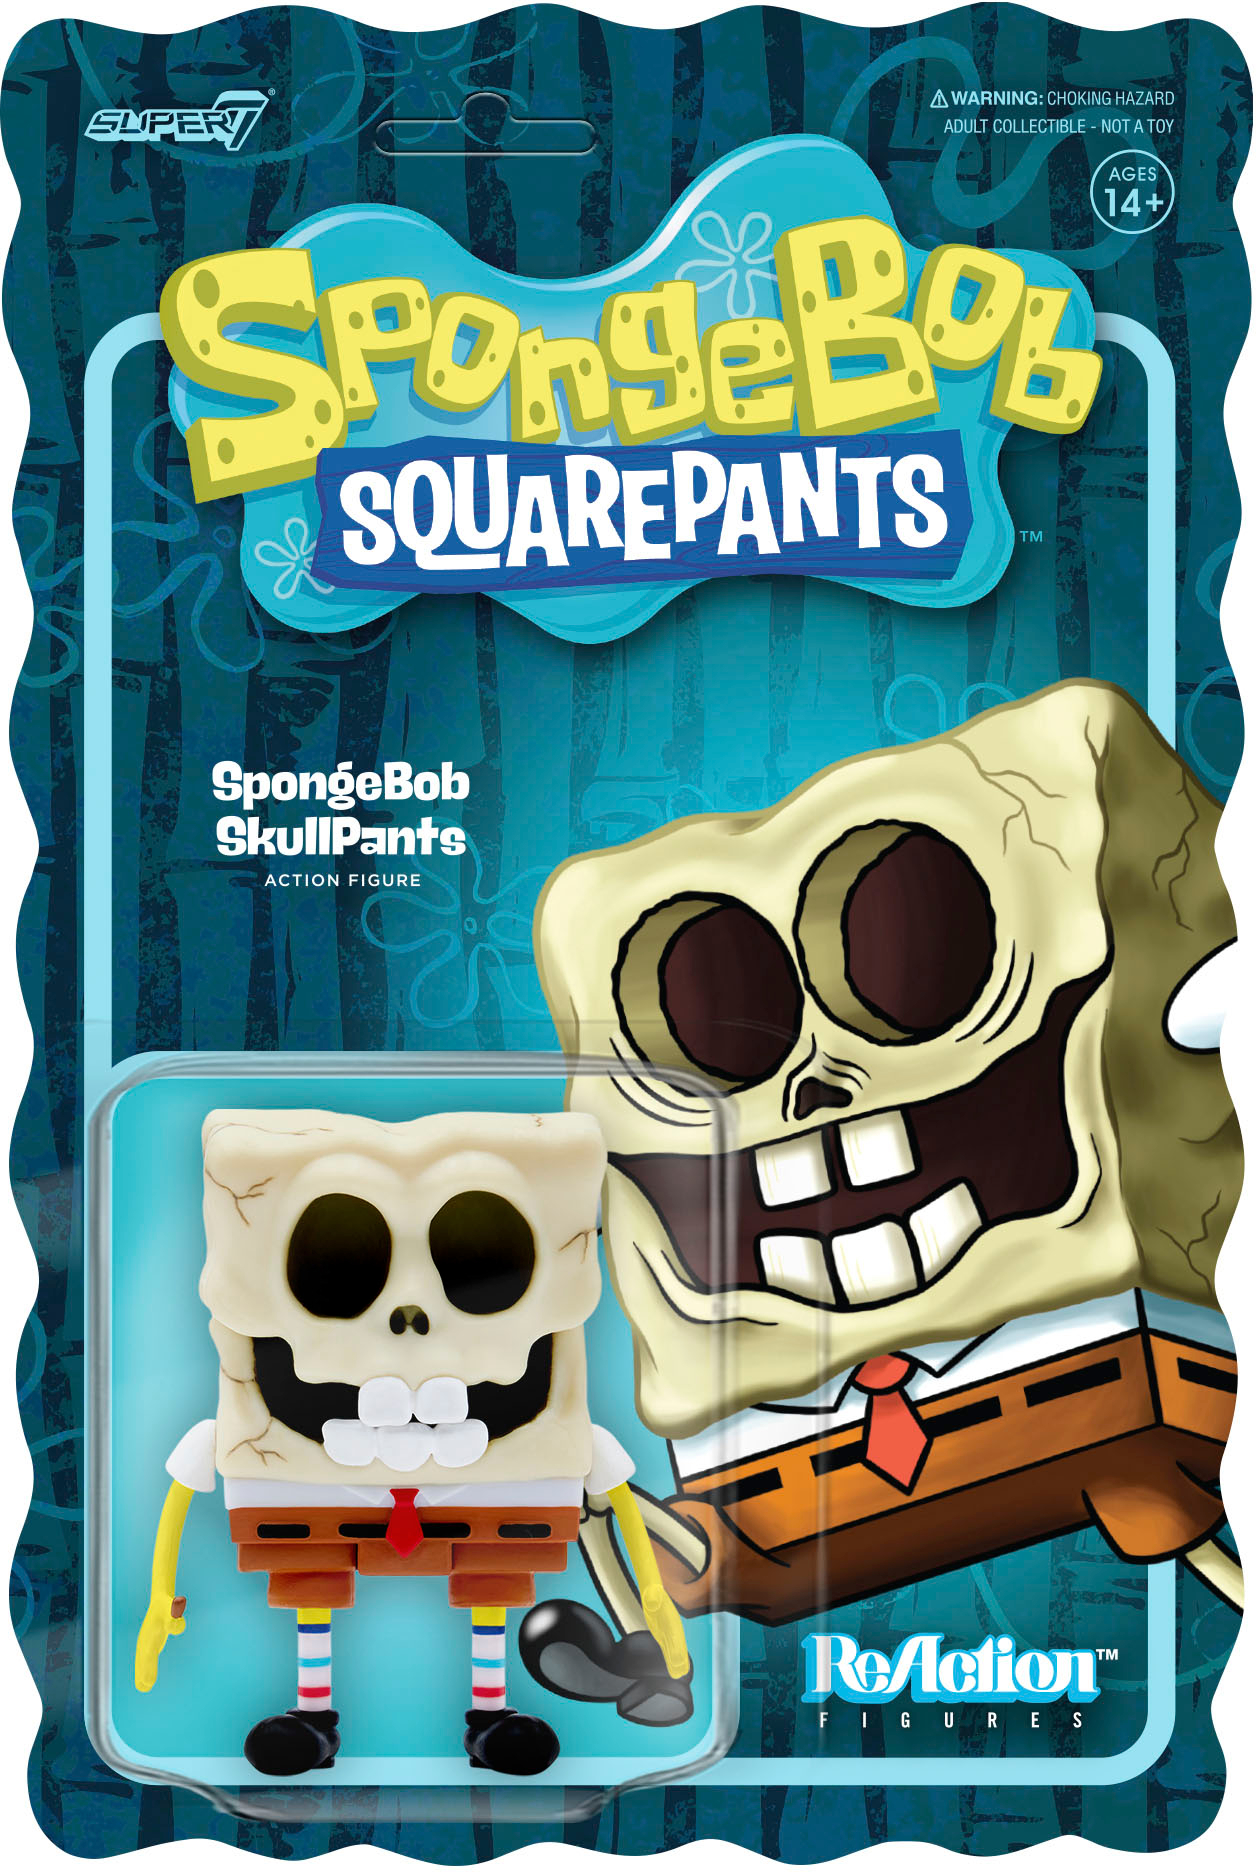 what you guys think about modern spongebob : r/spongebob